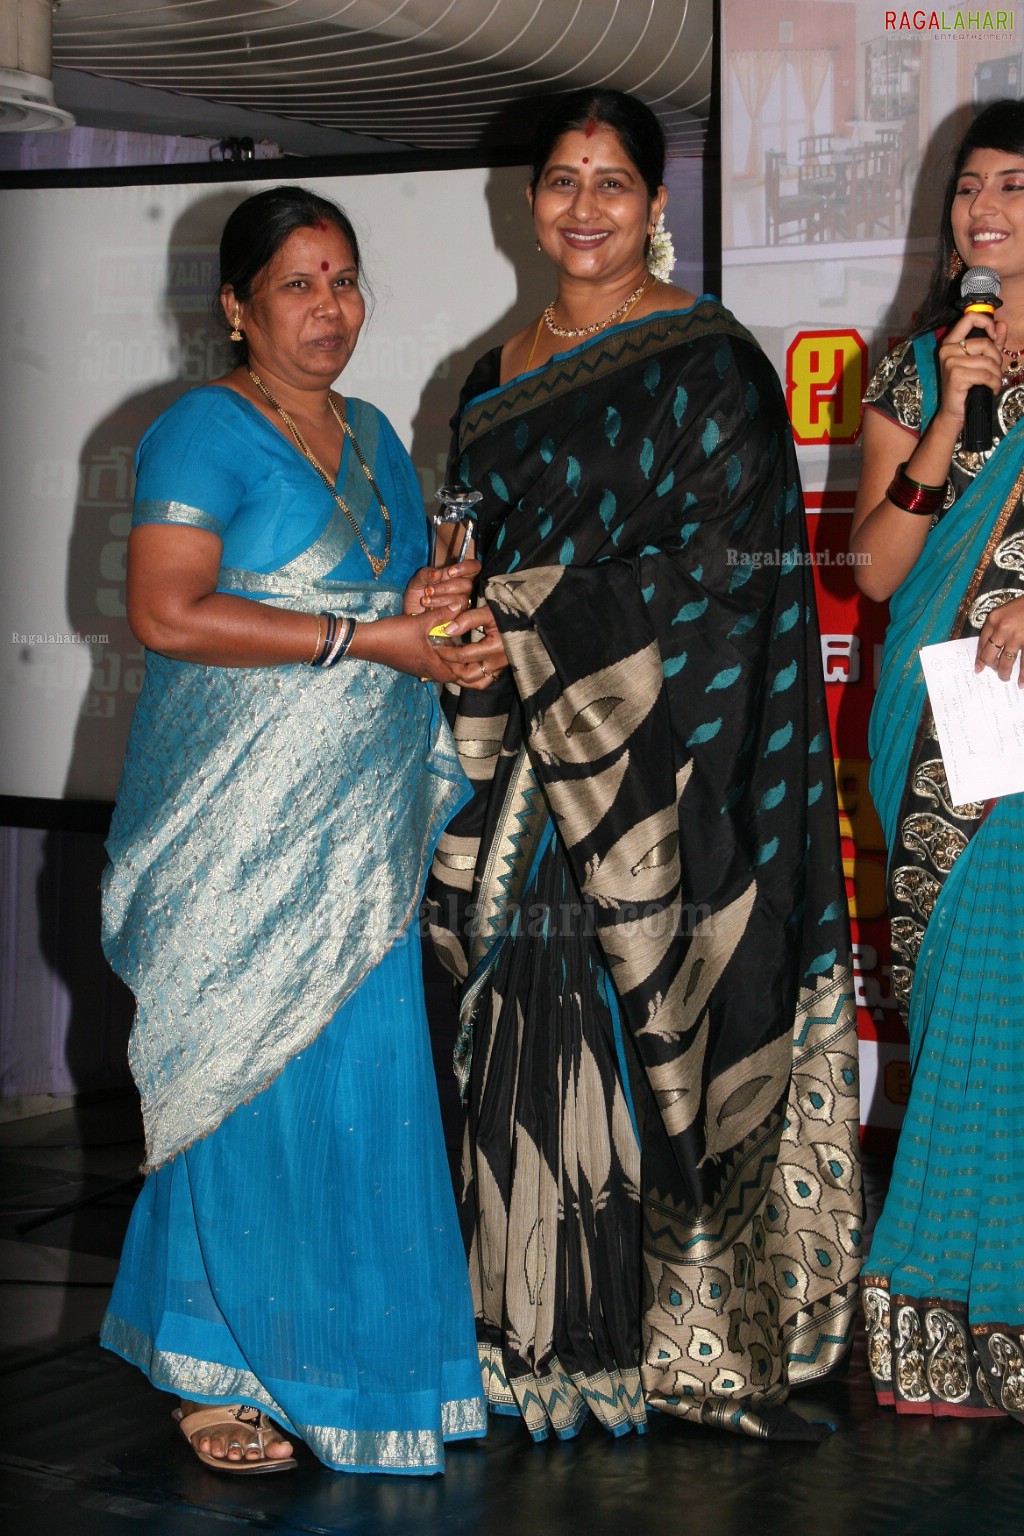 Big Bazaar's 'The Great Indian Kitchen Awards'